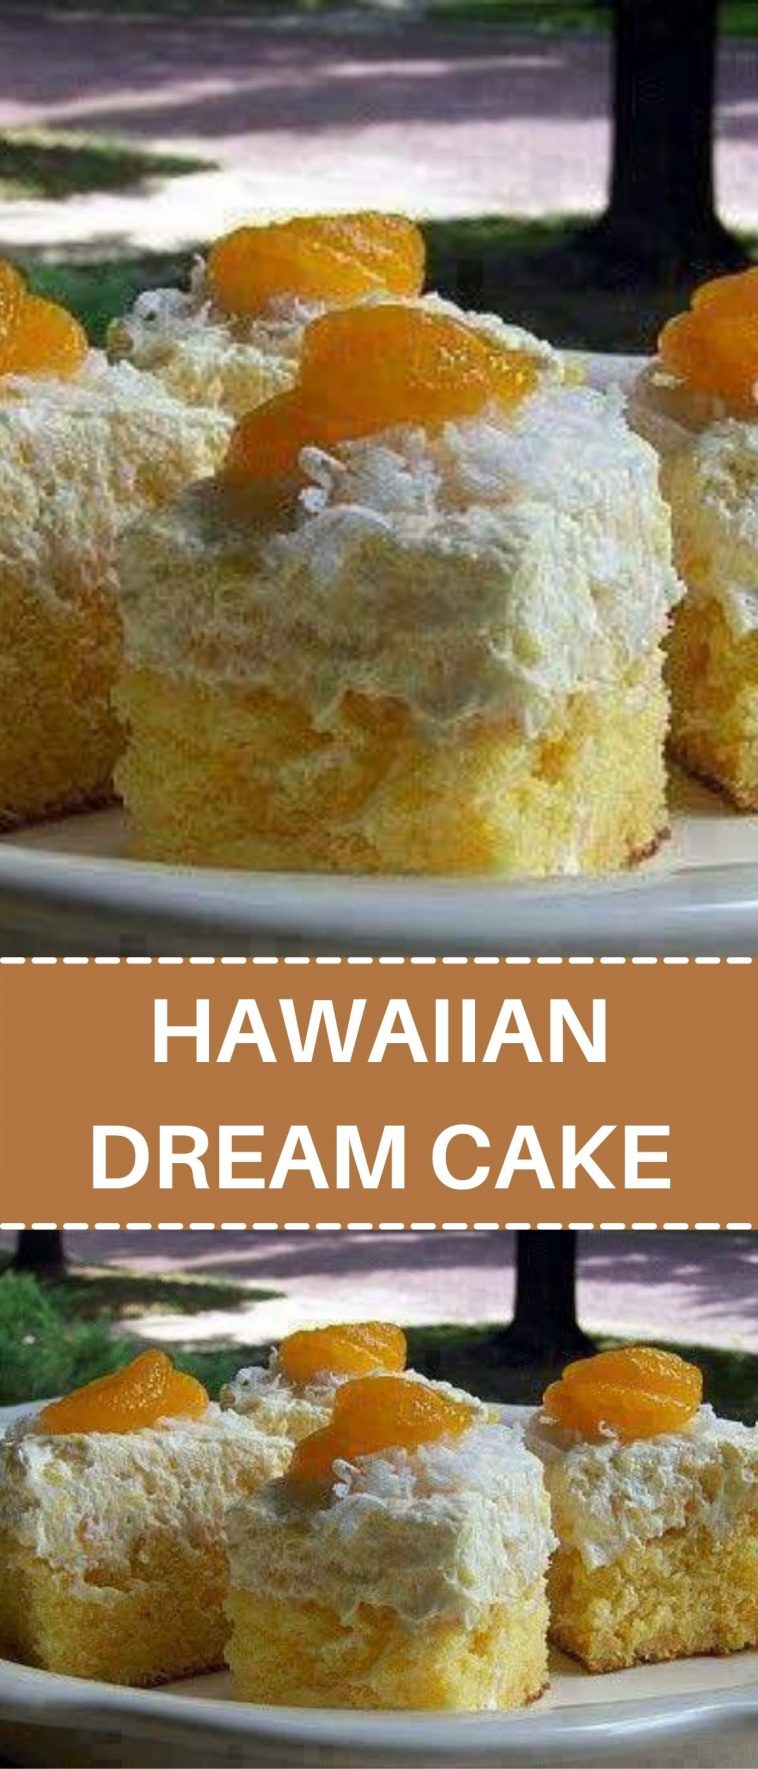 HAWAIIAN DREAM CAKE